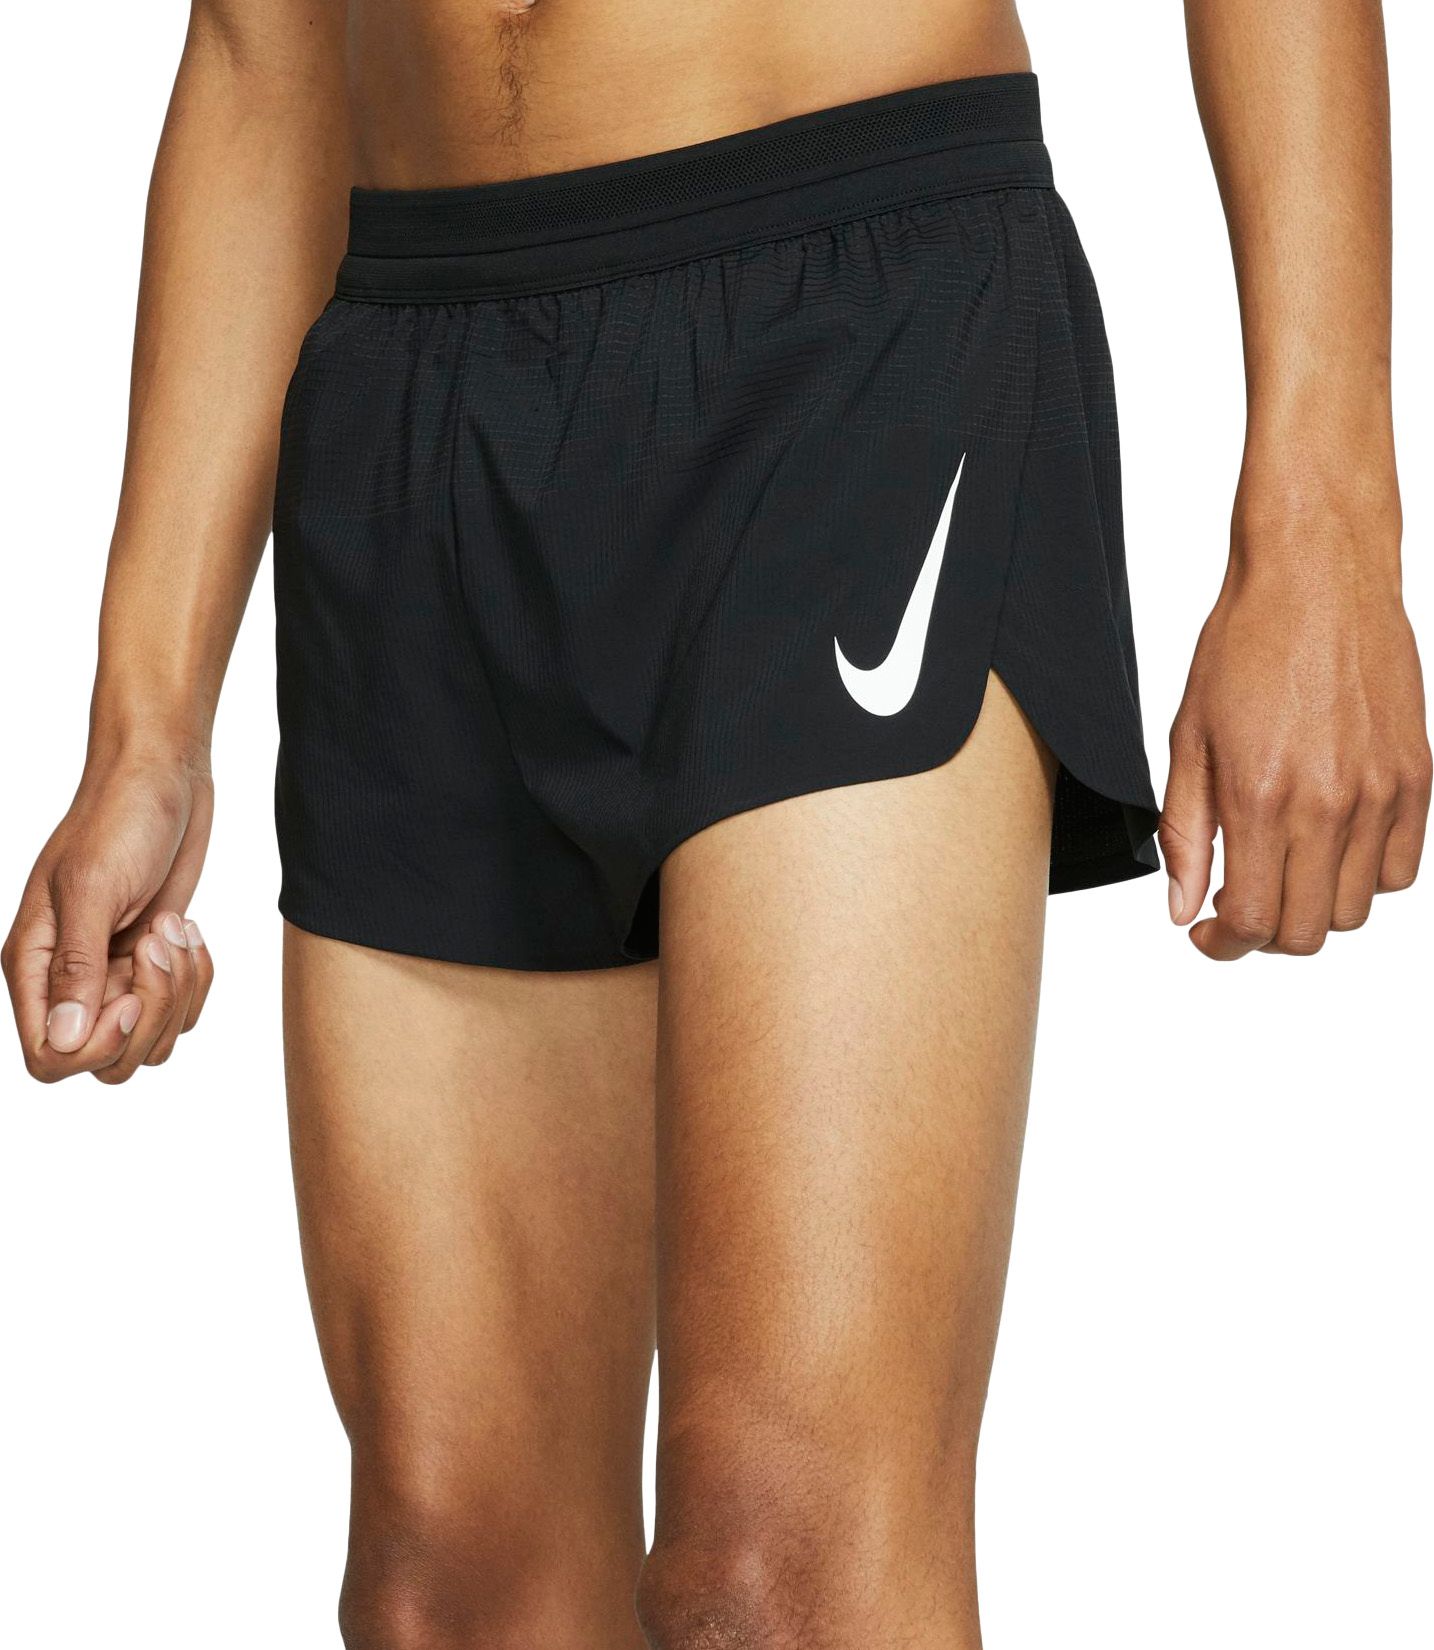 Nike shorts men dicks